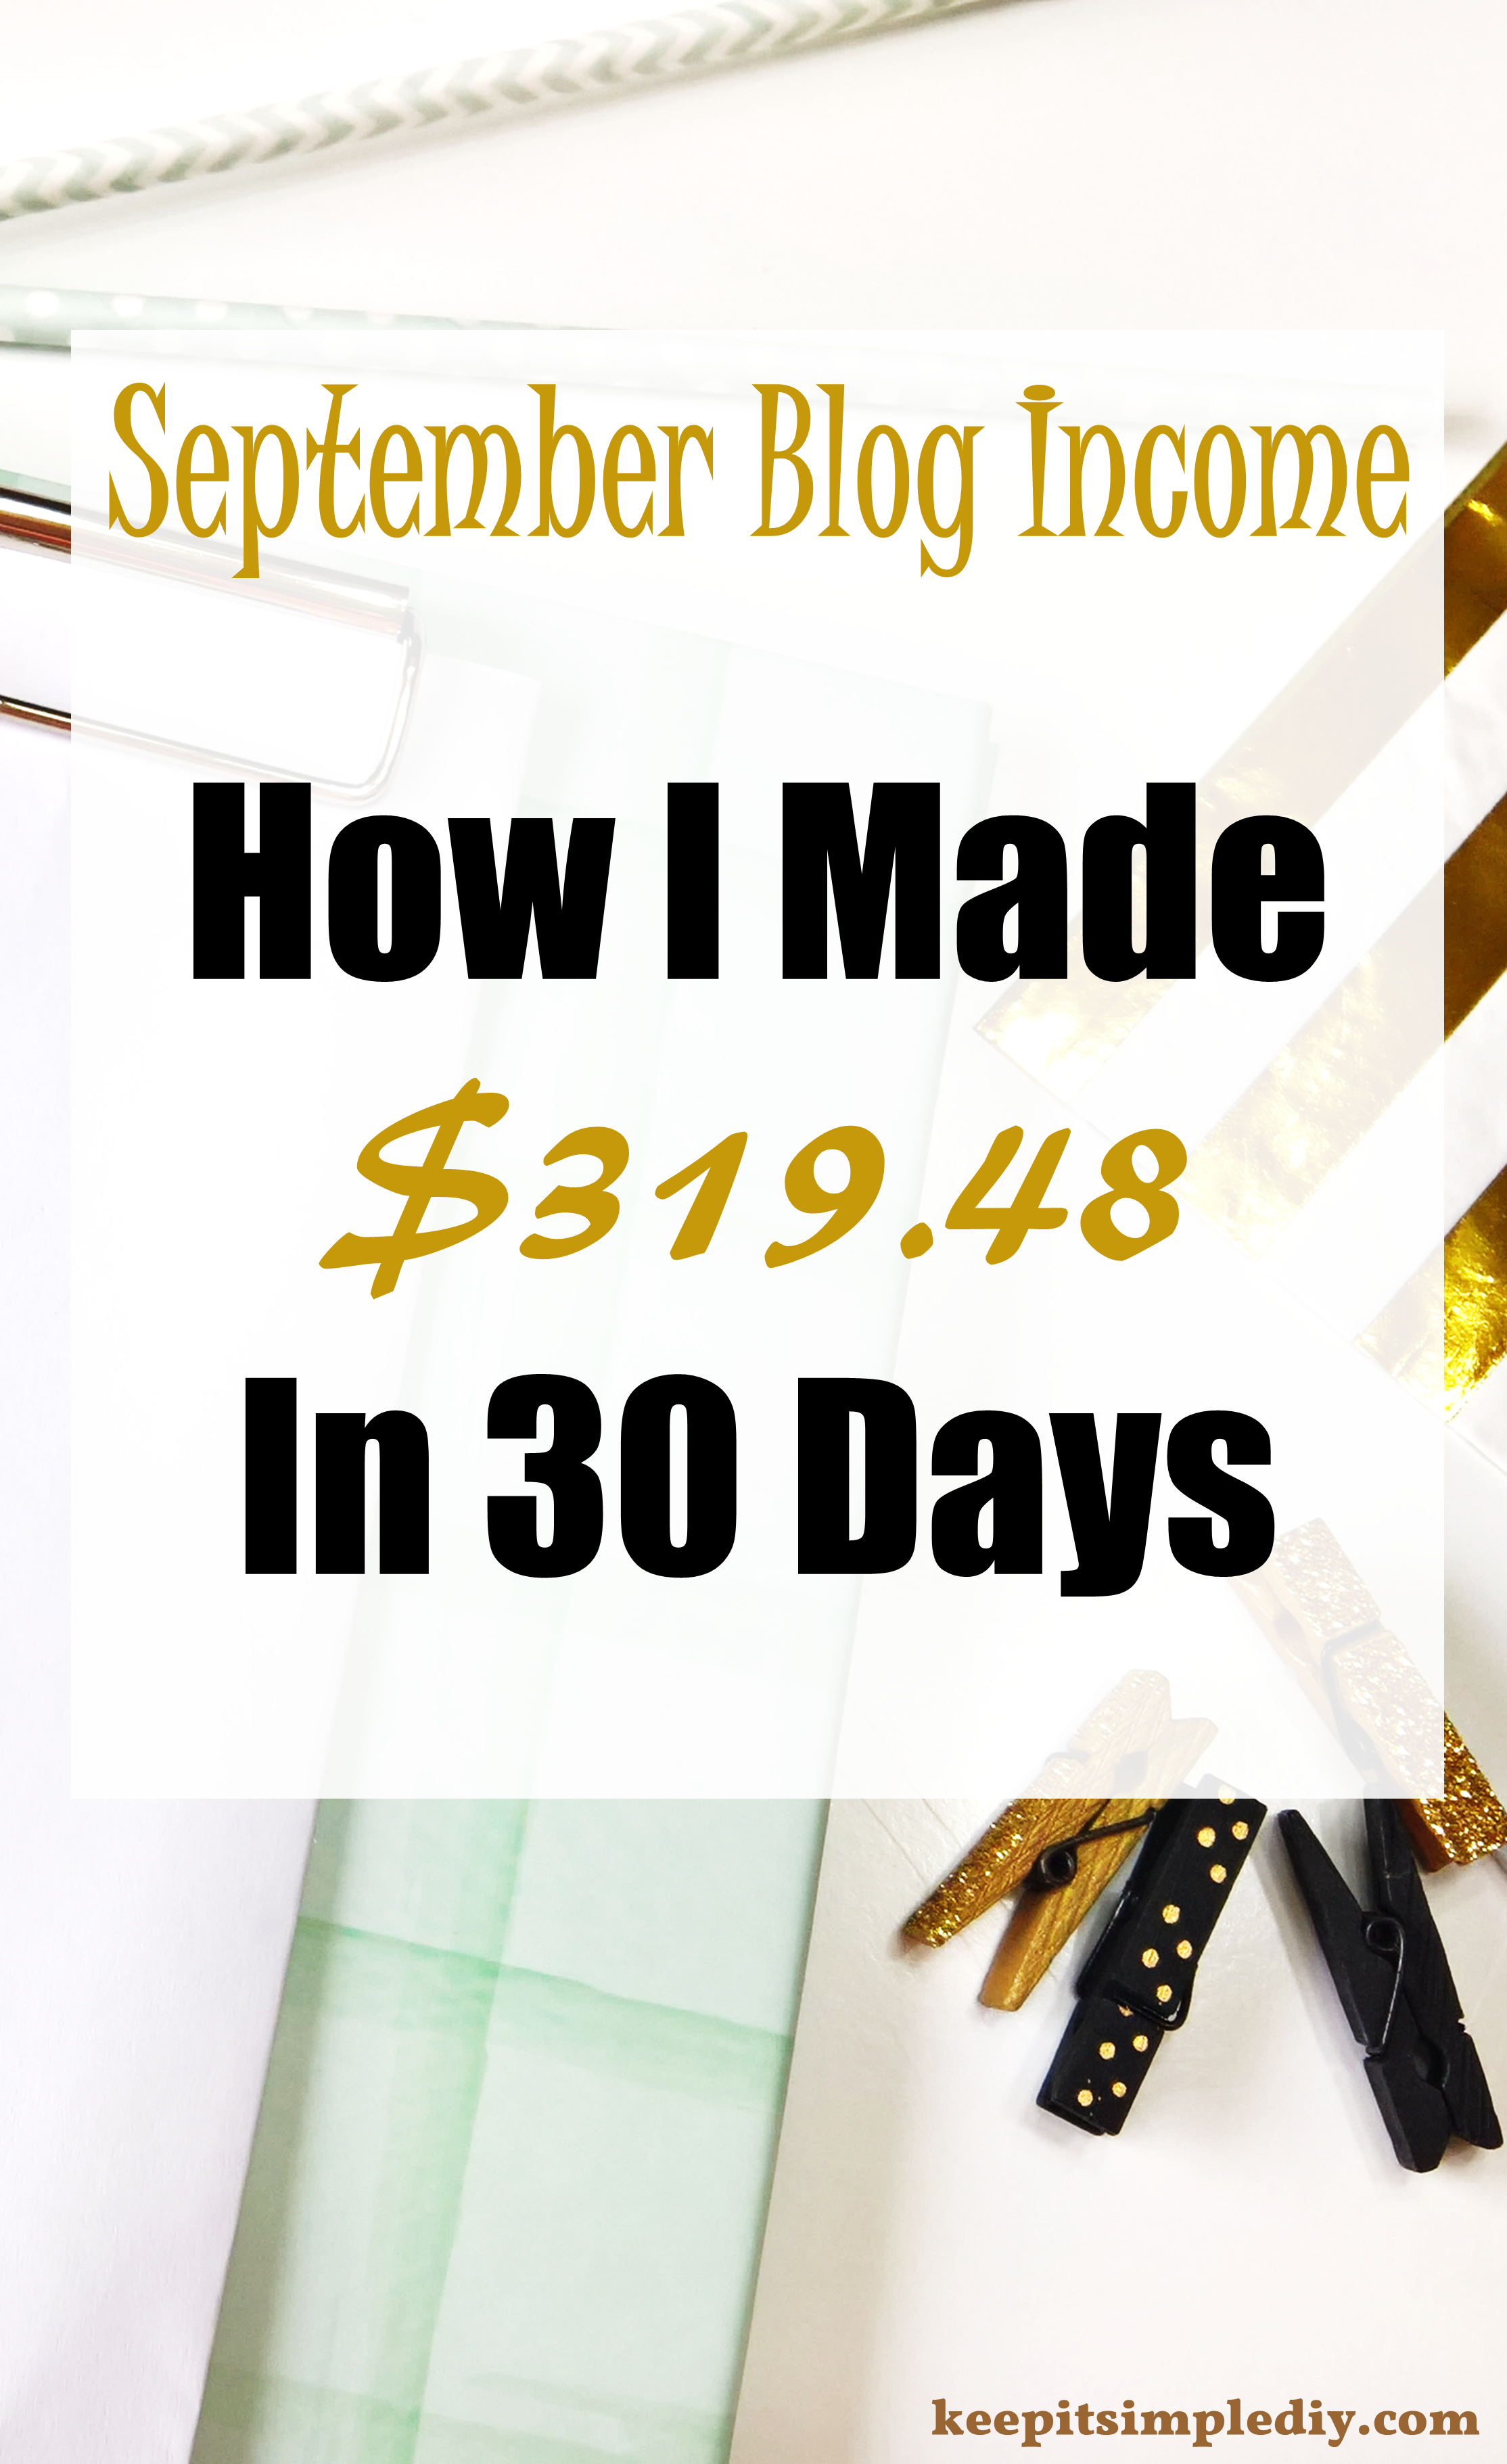 September 2017 Blog Income Report